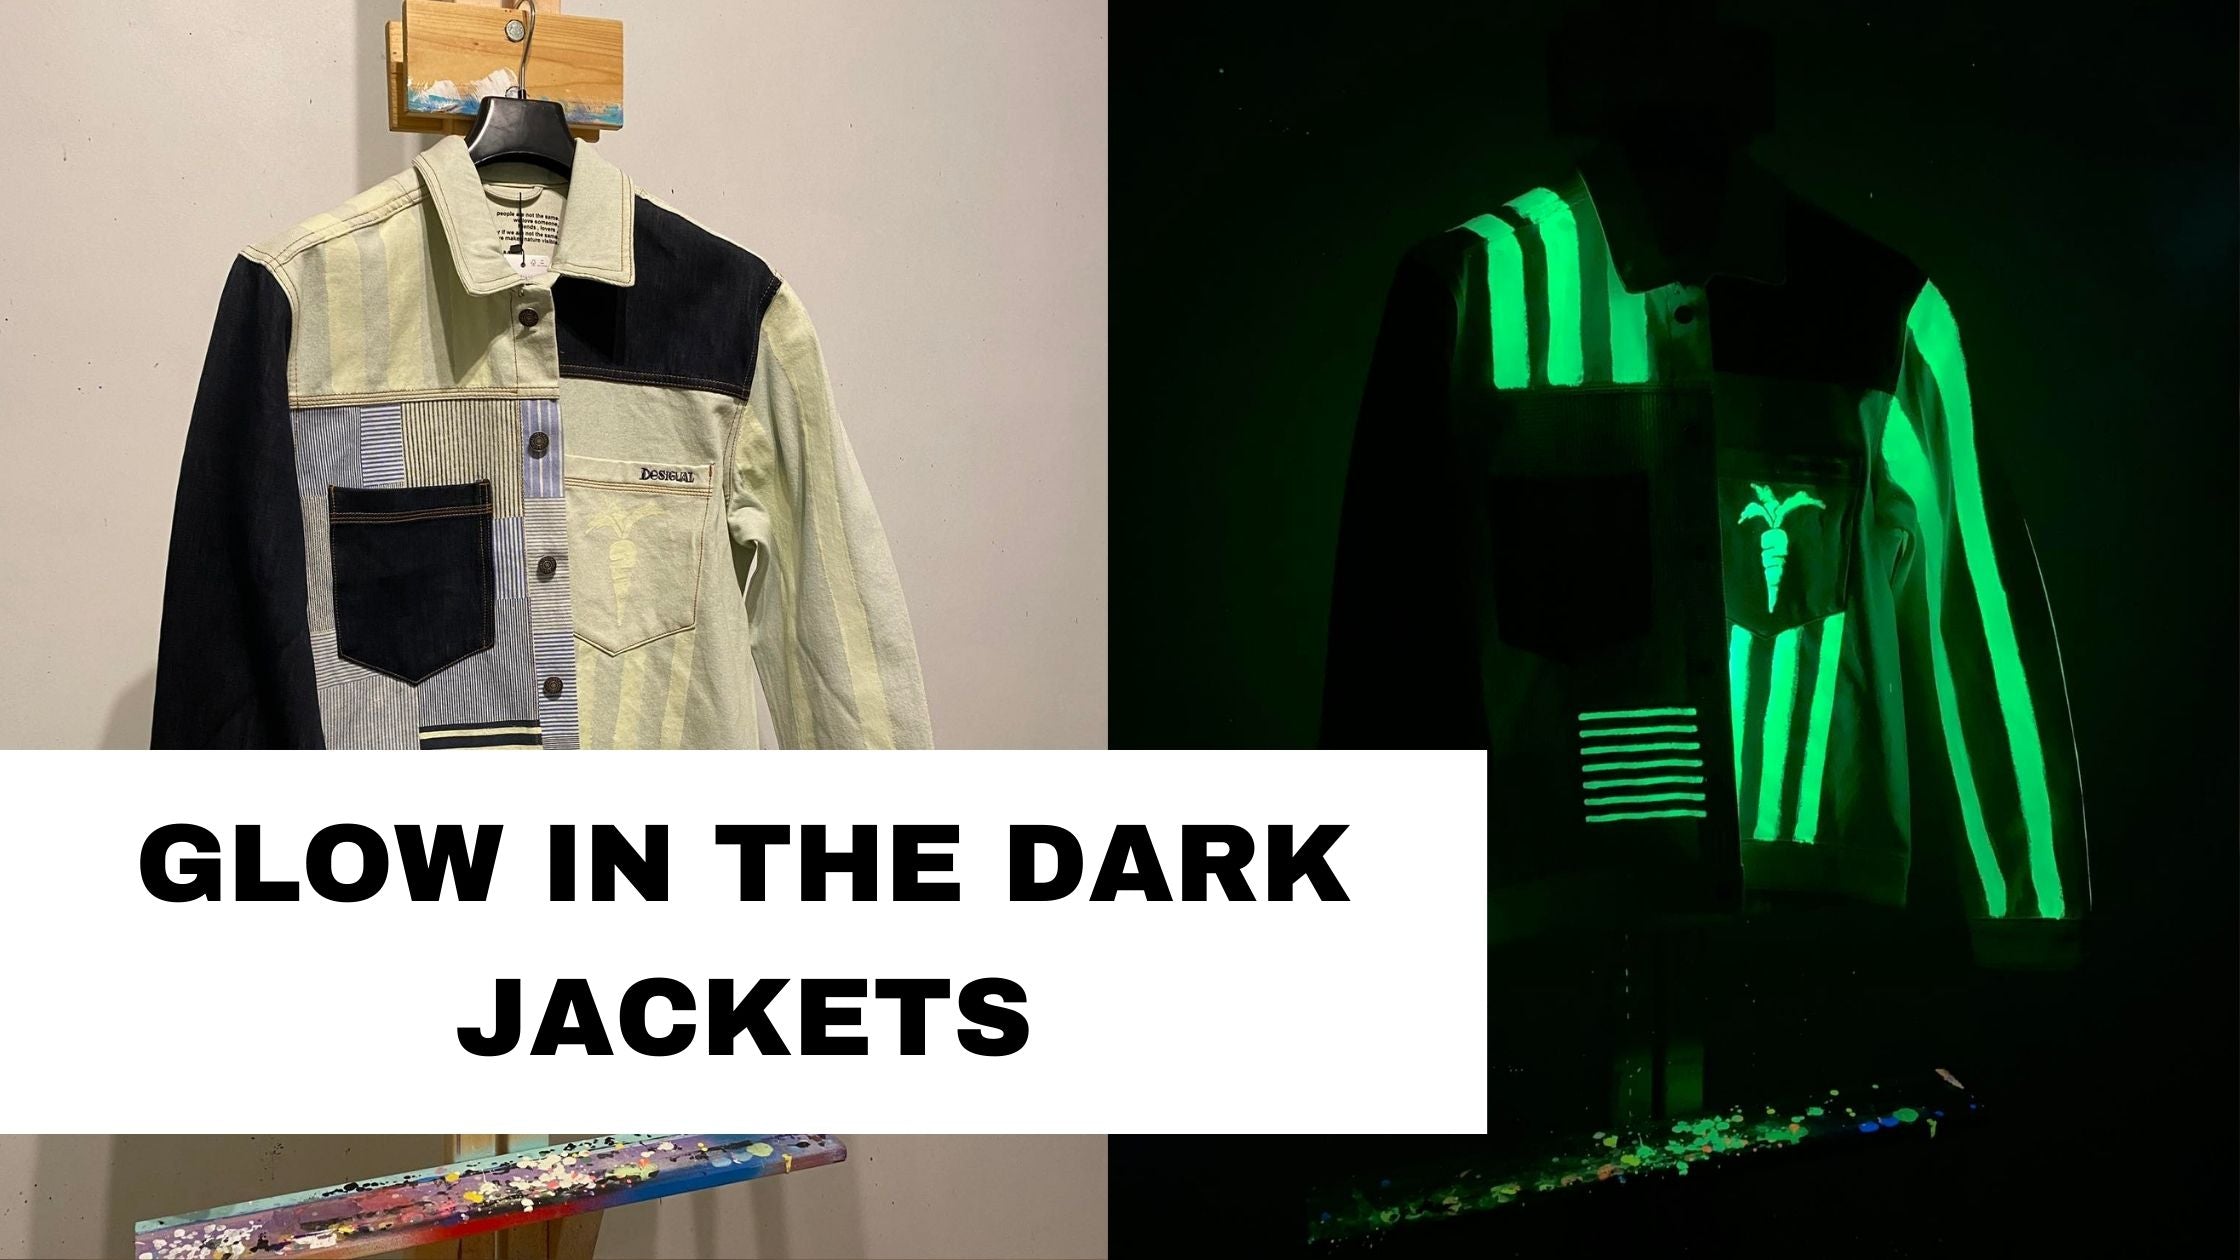 Glow-in-the-Dark Jackets Illuminating The Fashion World